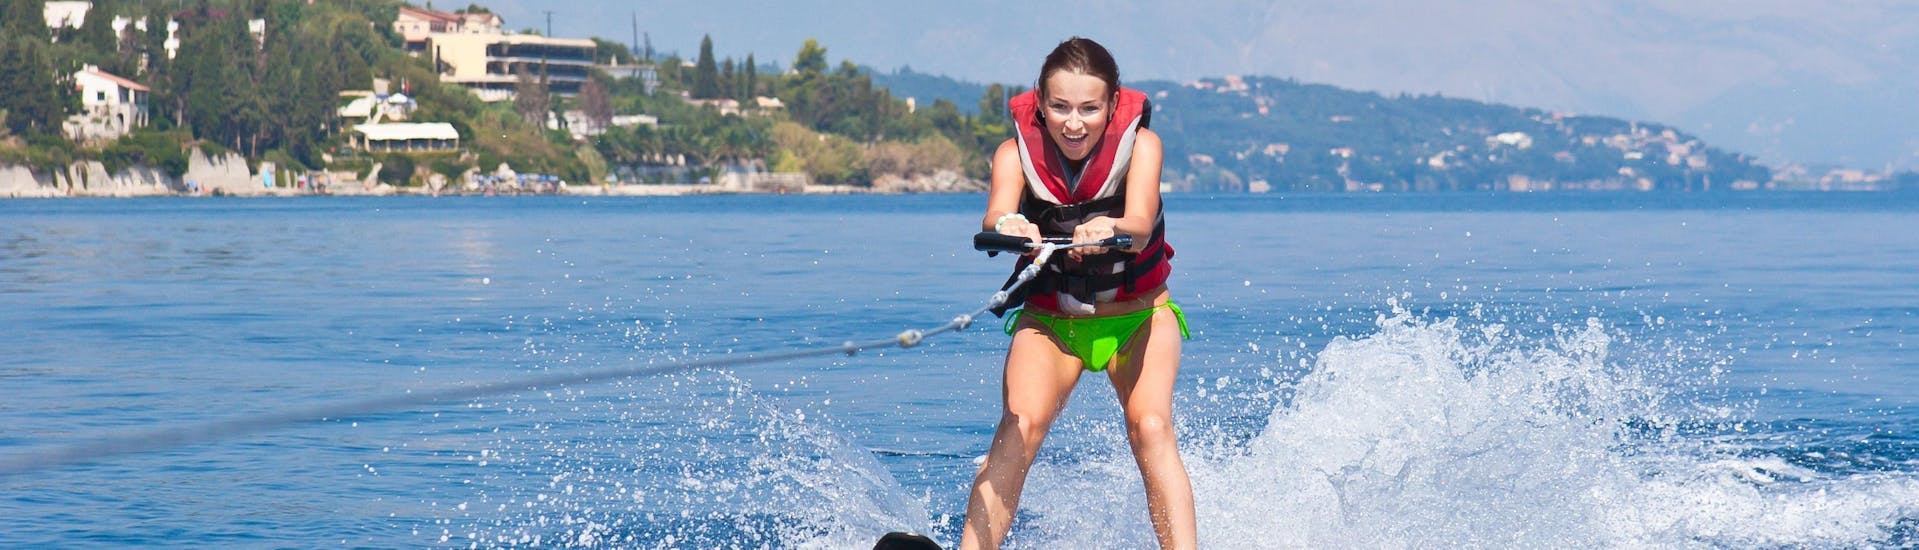 A girl is having fun on waterskis